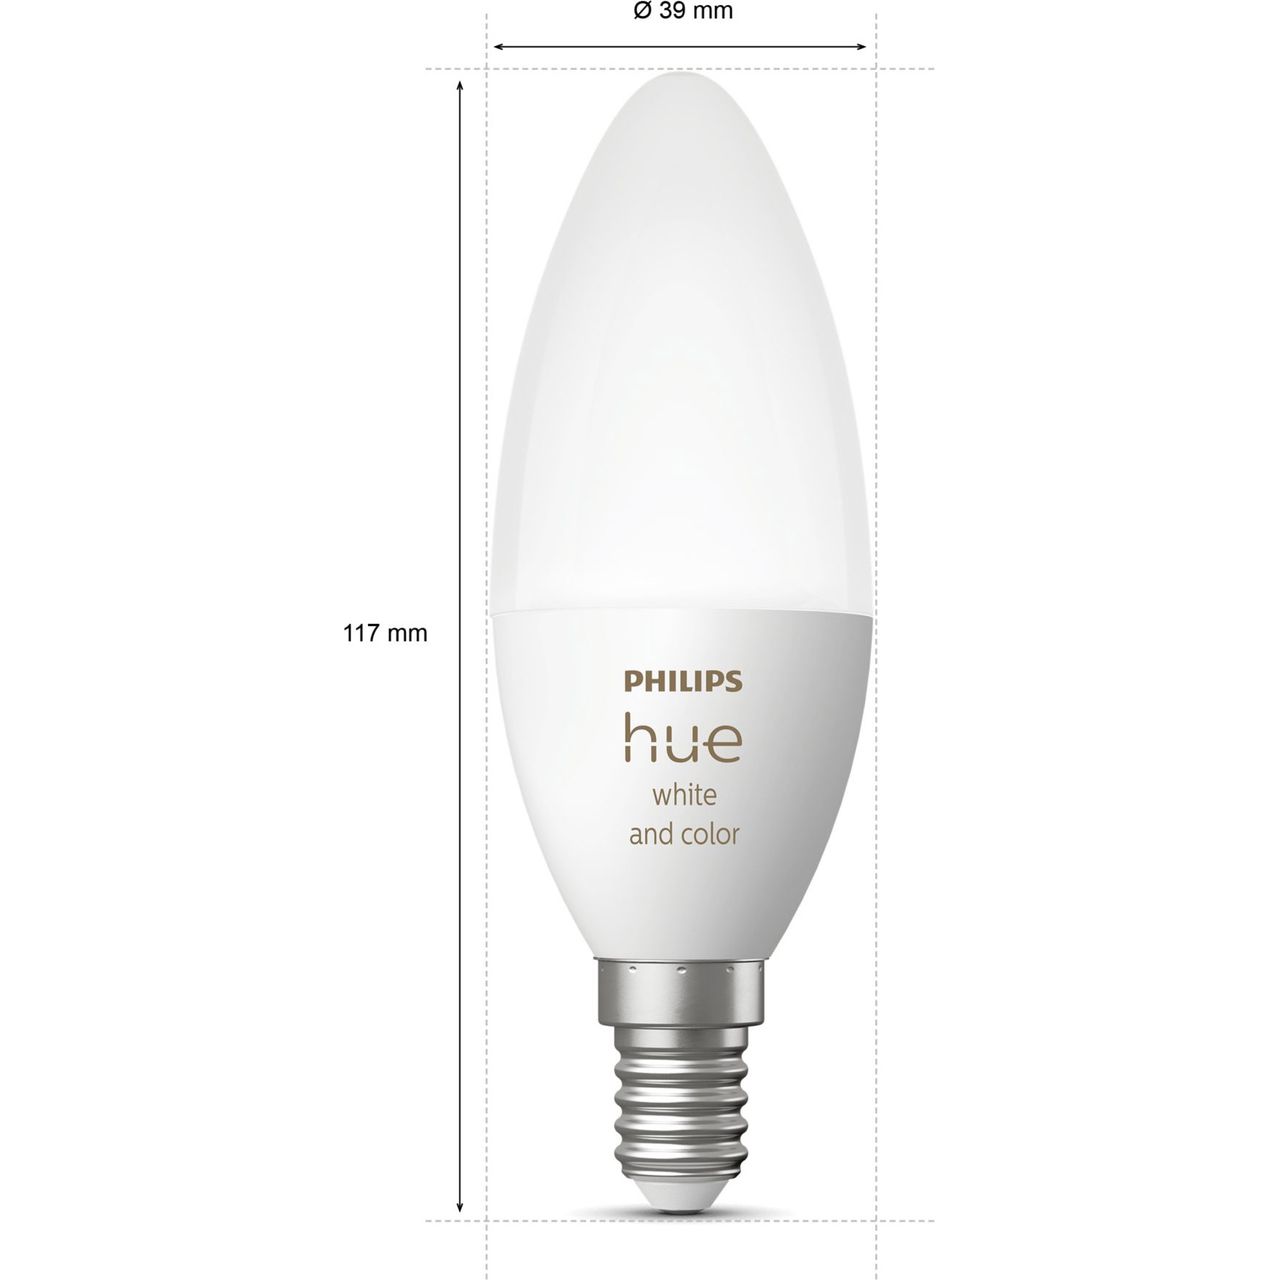 Philips hue ambiance e14 bulb • Compare prices »